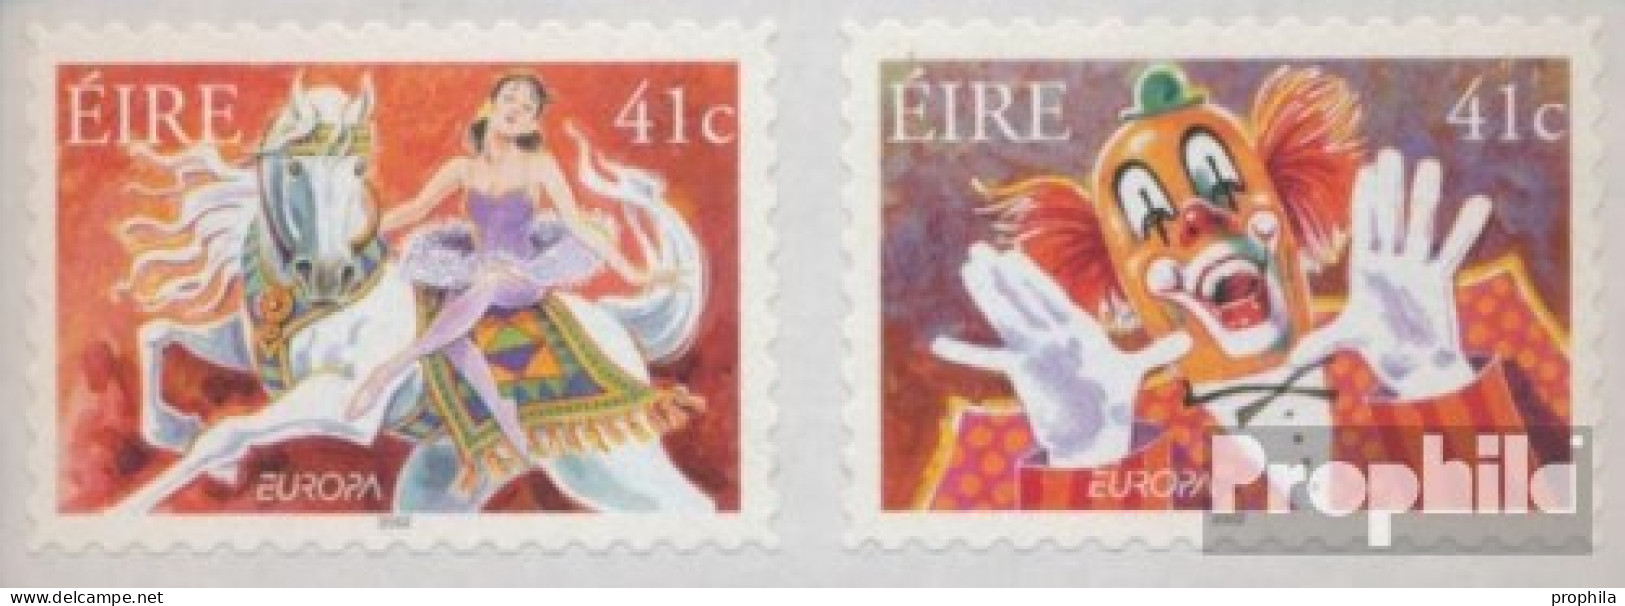 Irland 1434-1435 Paar (kompl.Ausg.) Postfrisch 2002 Zirkus - Ongebruikt